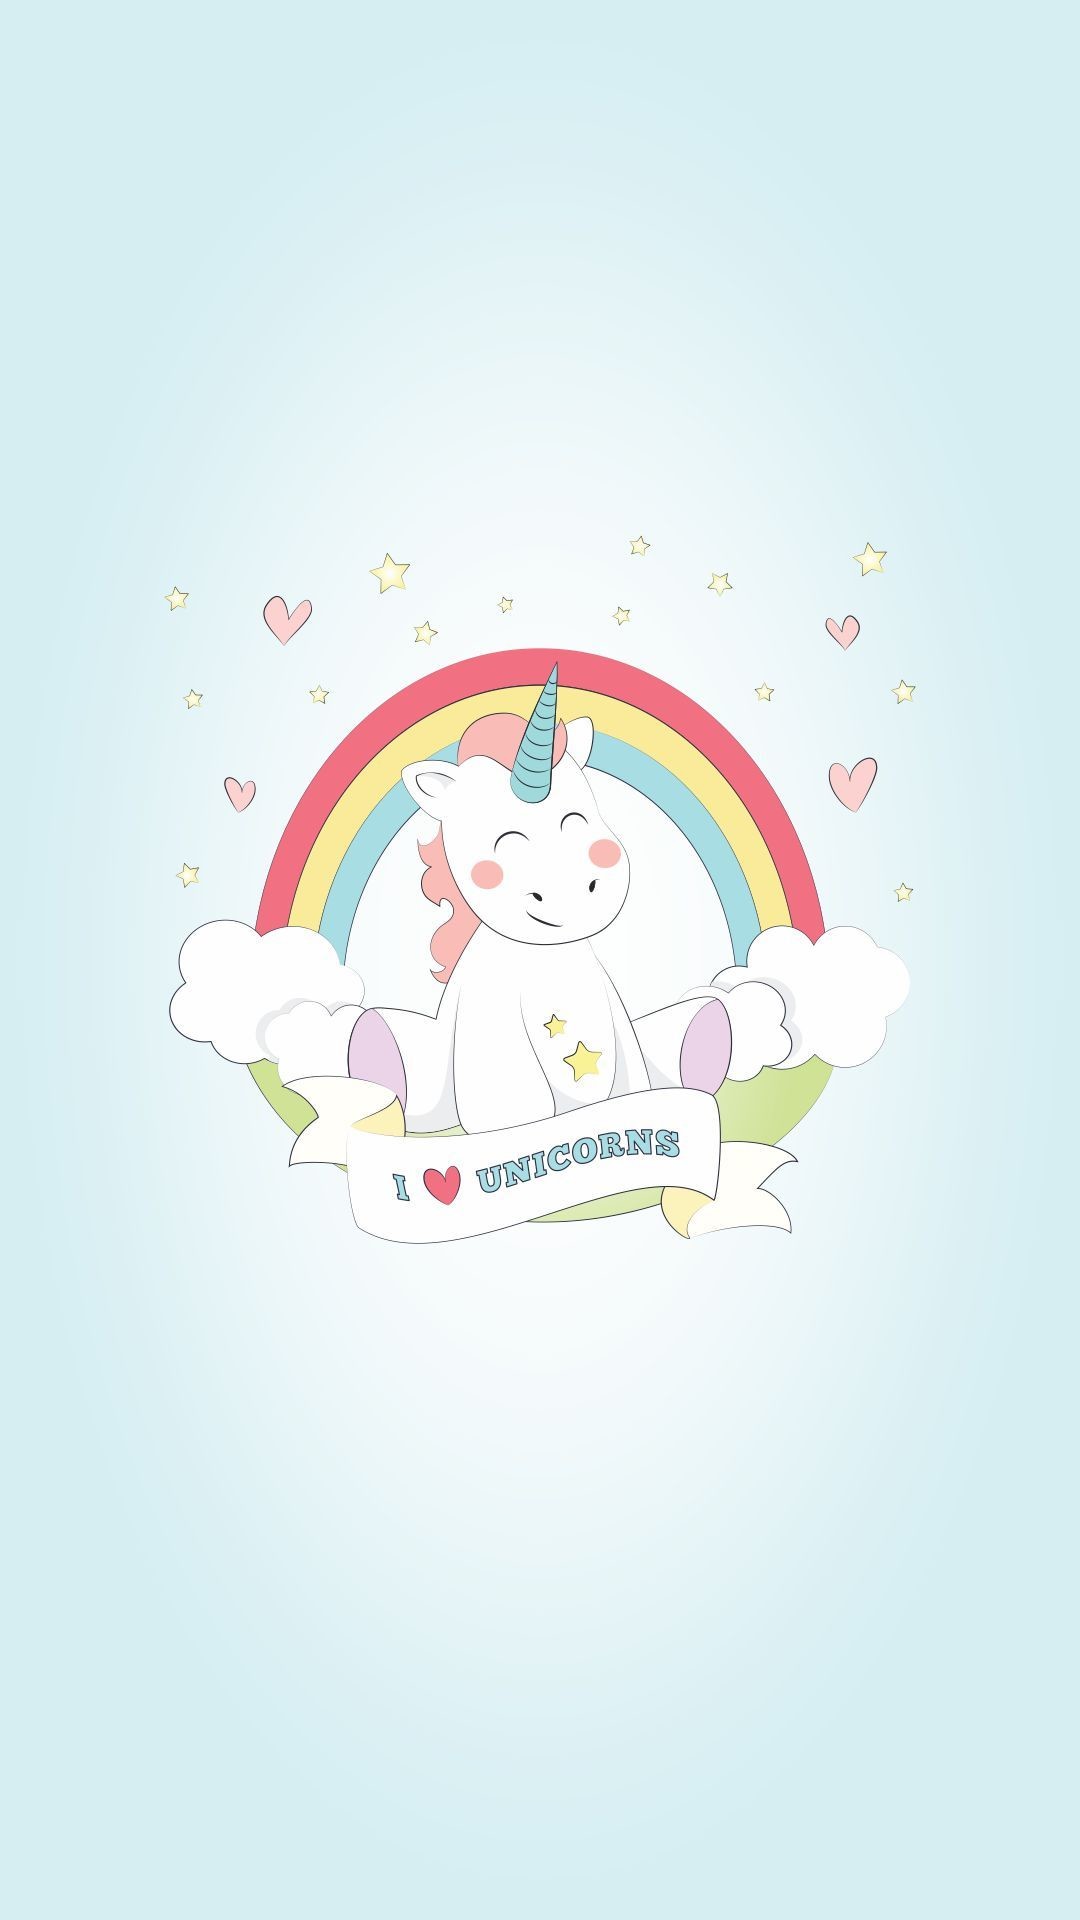 Cutest pink unicorn iPhone wallpaper in iOS 7 colors  riWallpaper